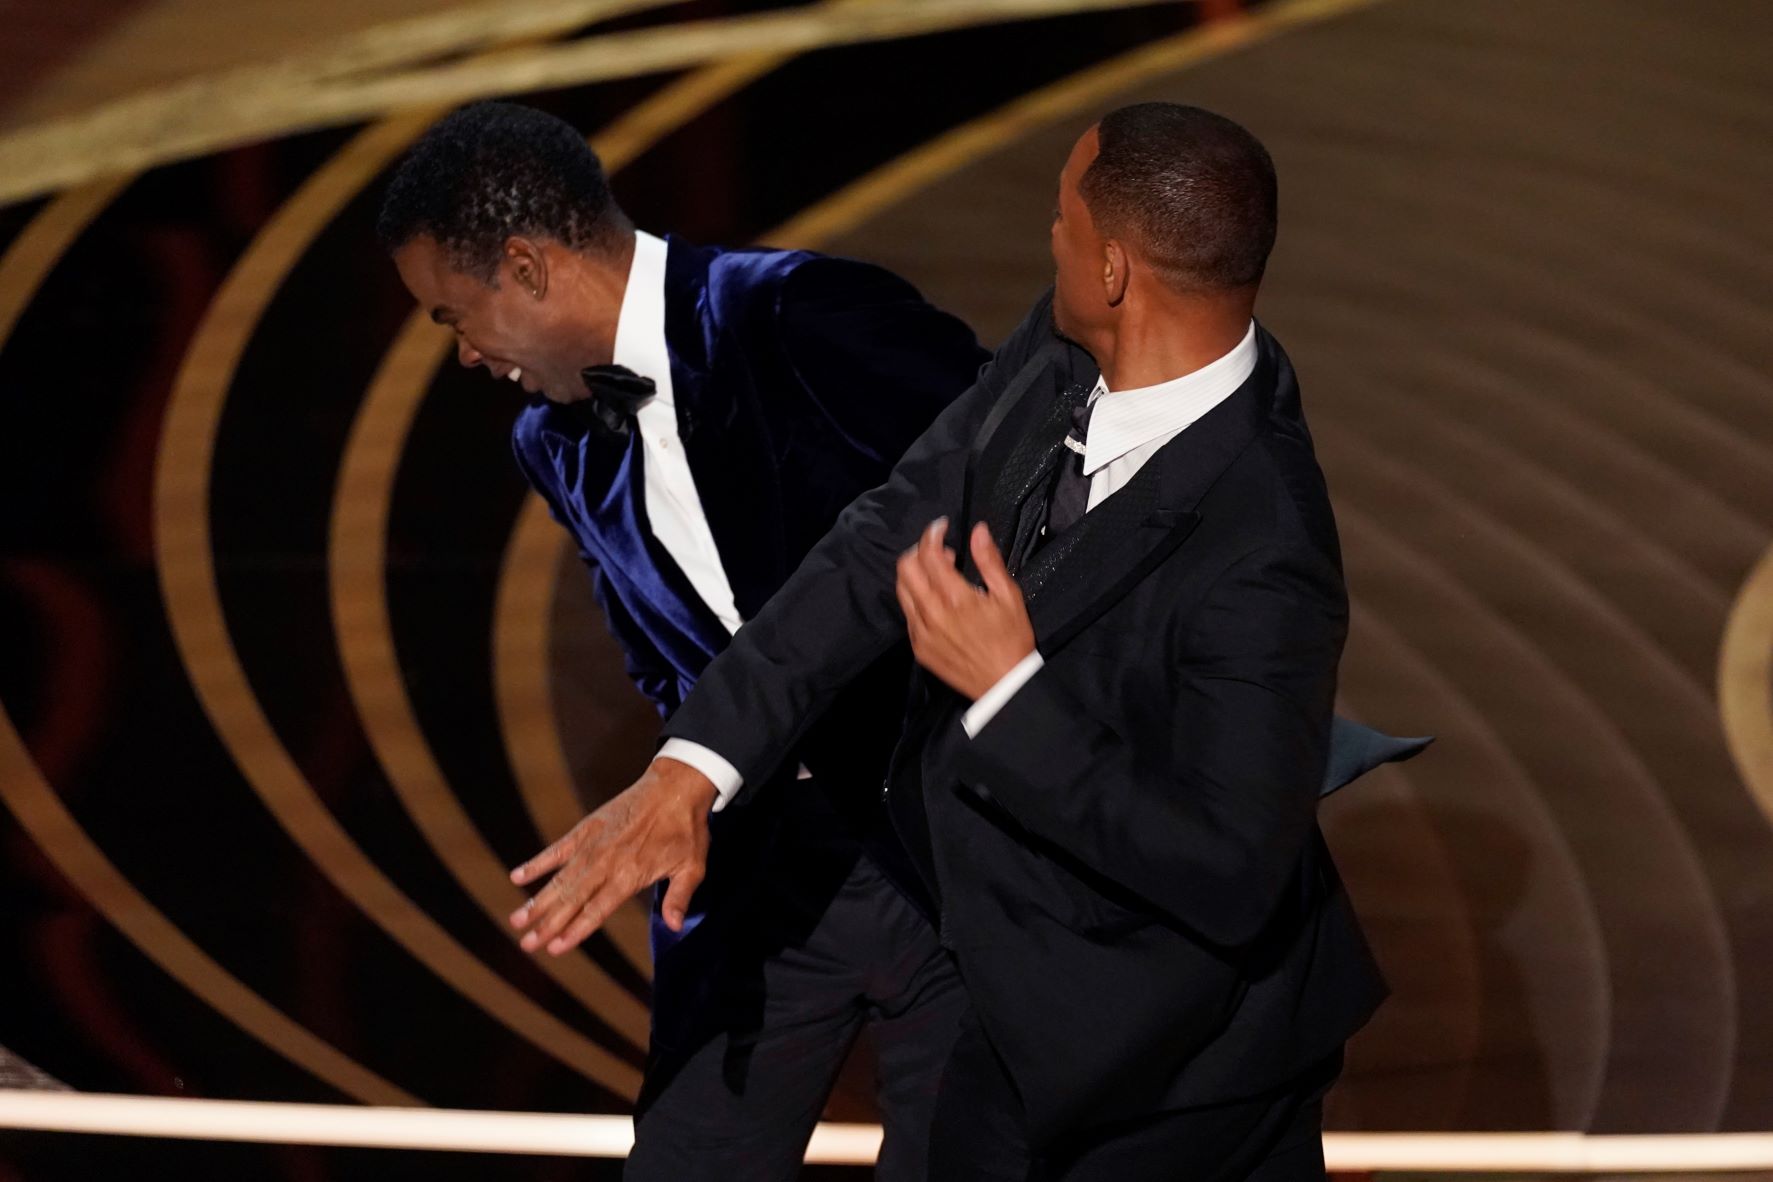 Will Smith meminta maaf kepada Chris Rock: ‘Saya keluar jalur dan saya salah’